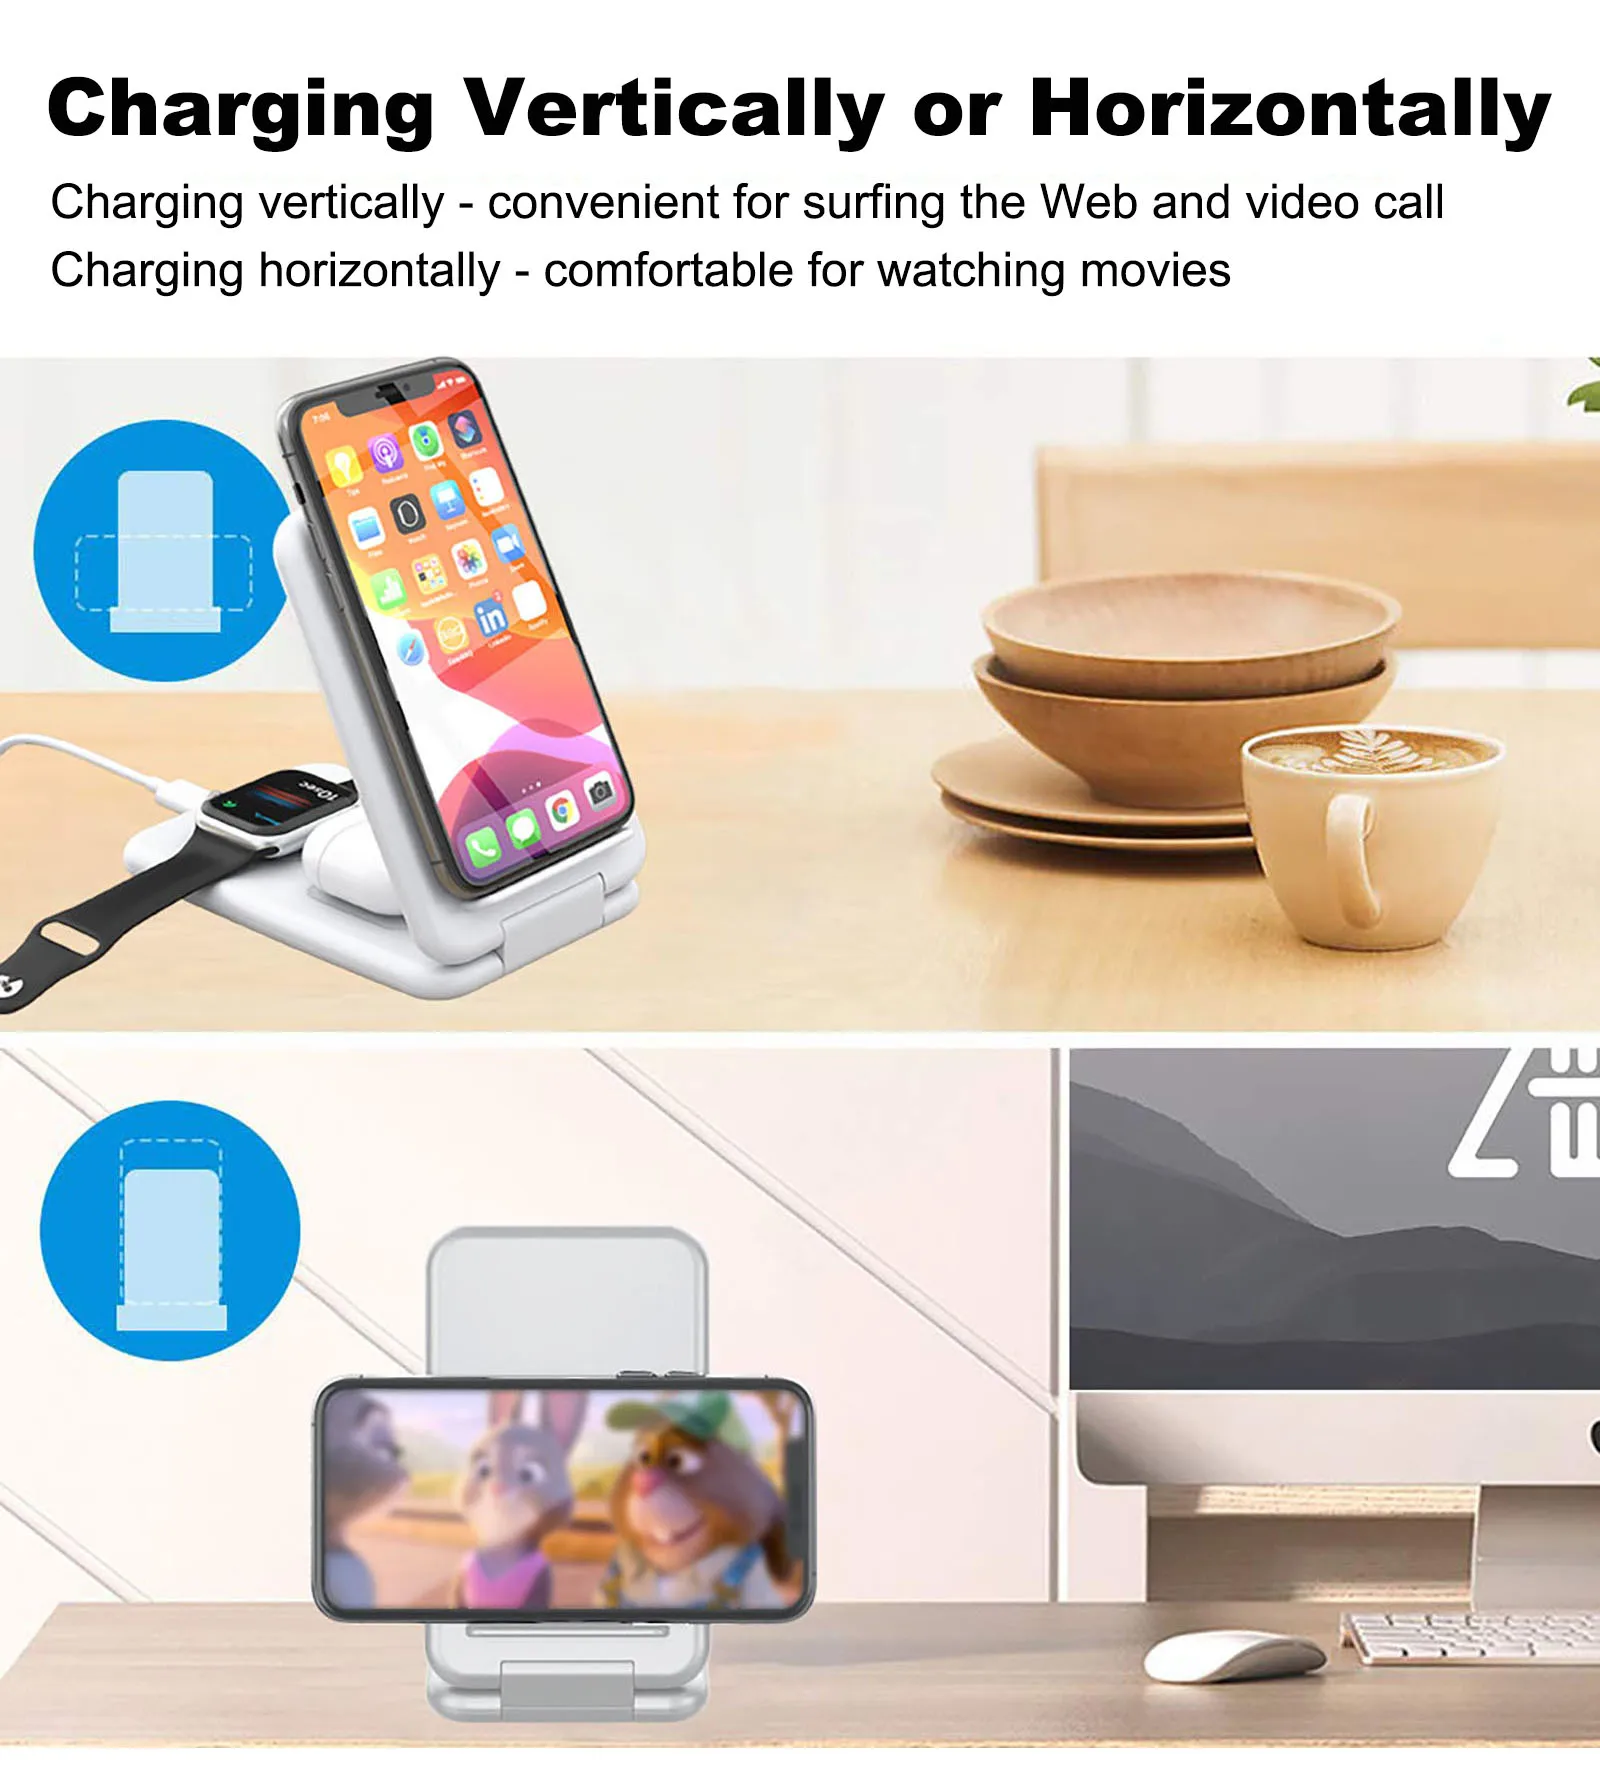 Charging Vertically or Horizontally